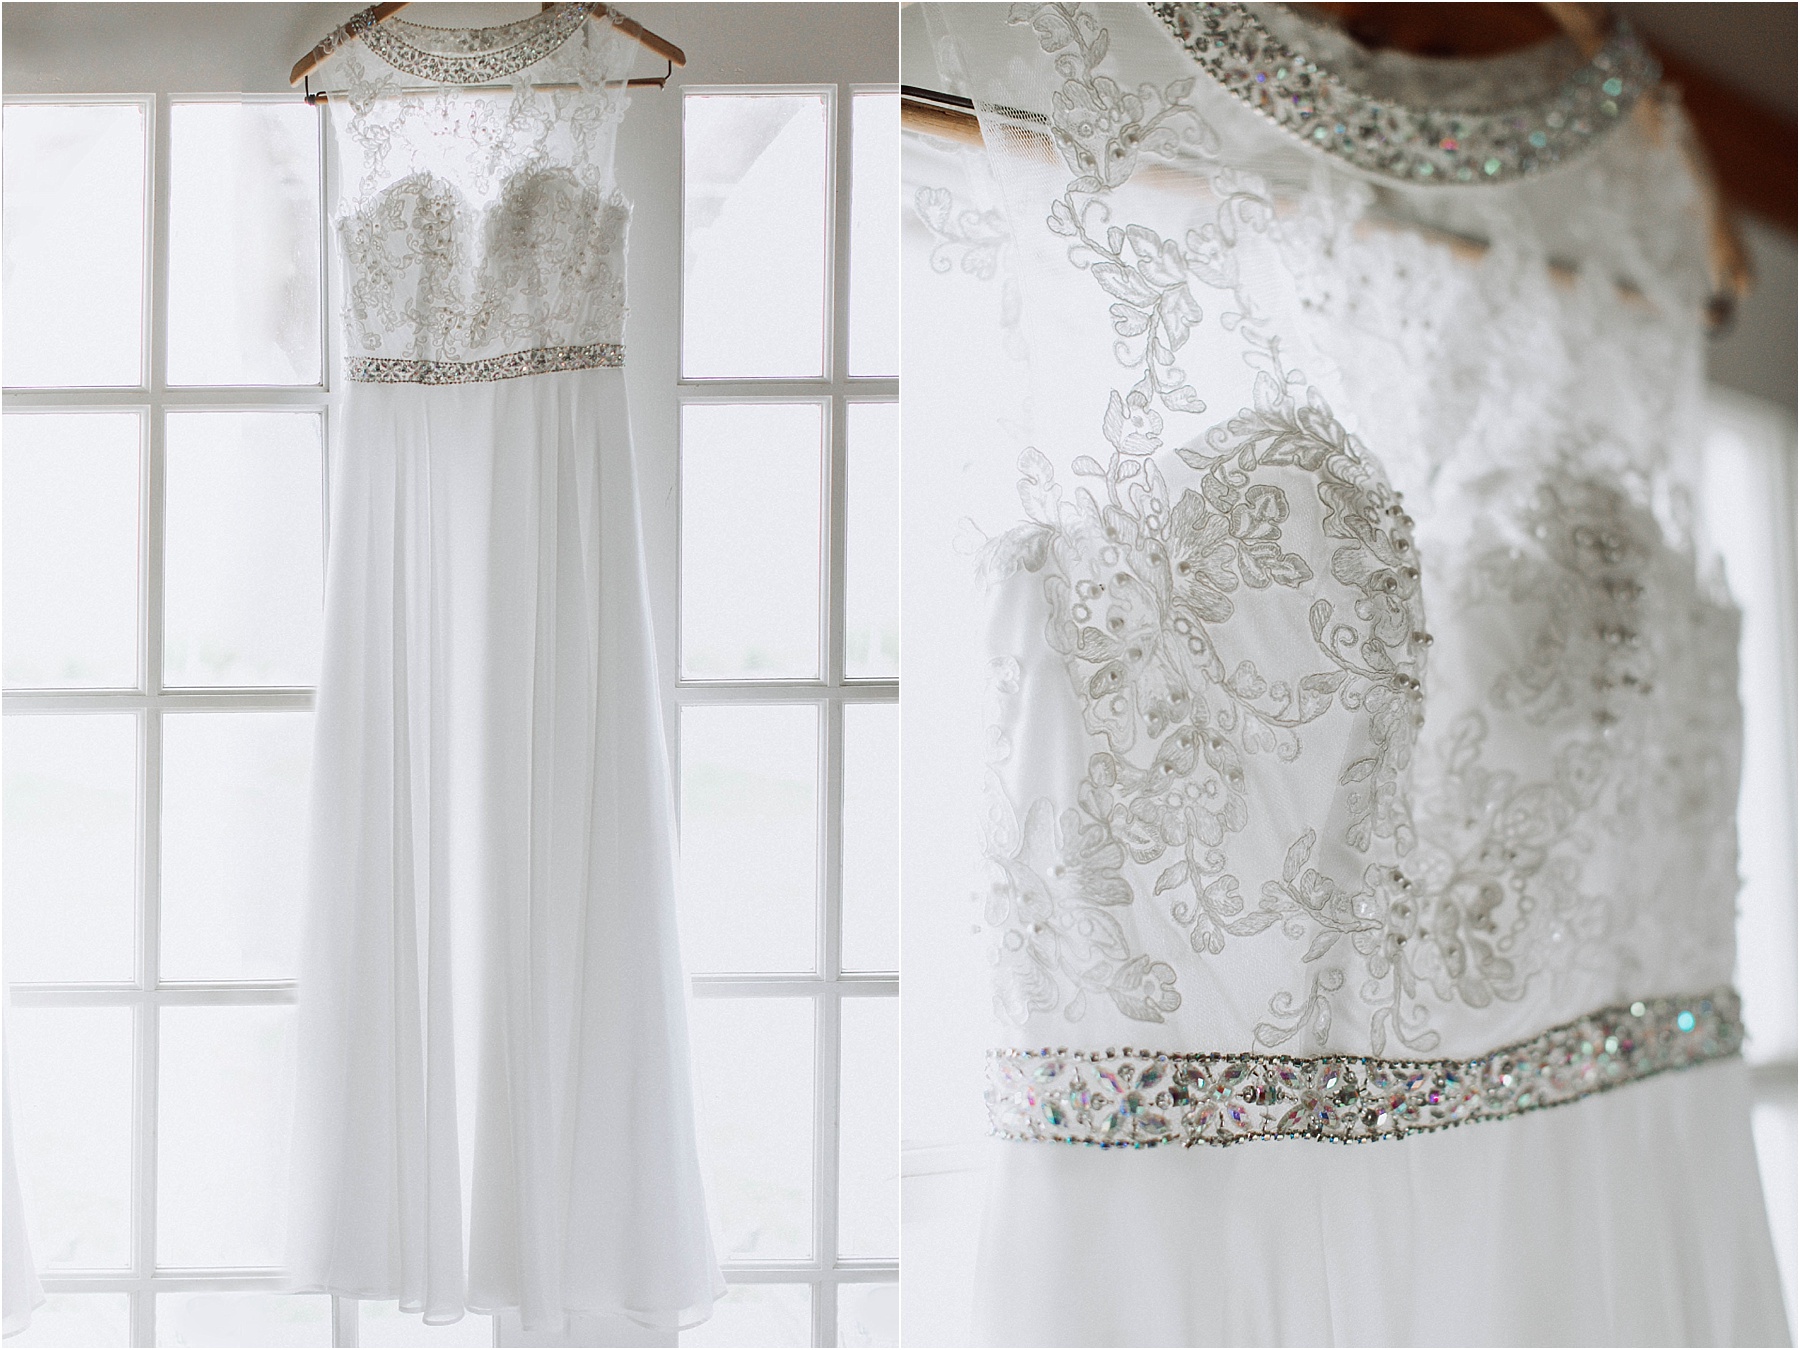 Vasquez Rocks Intimate Wedding & Elopement Photography - Bridal Dress Hanging